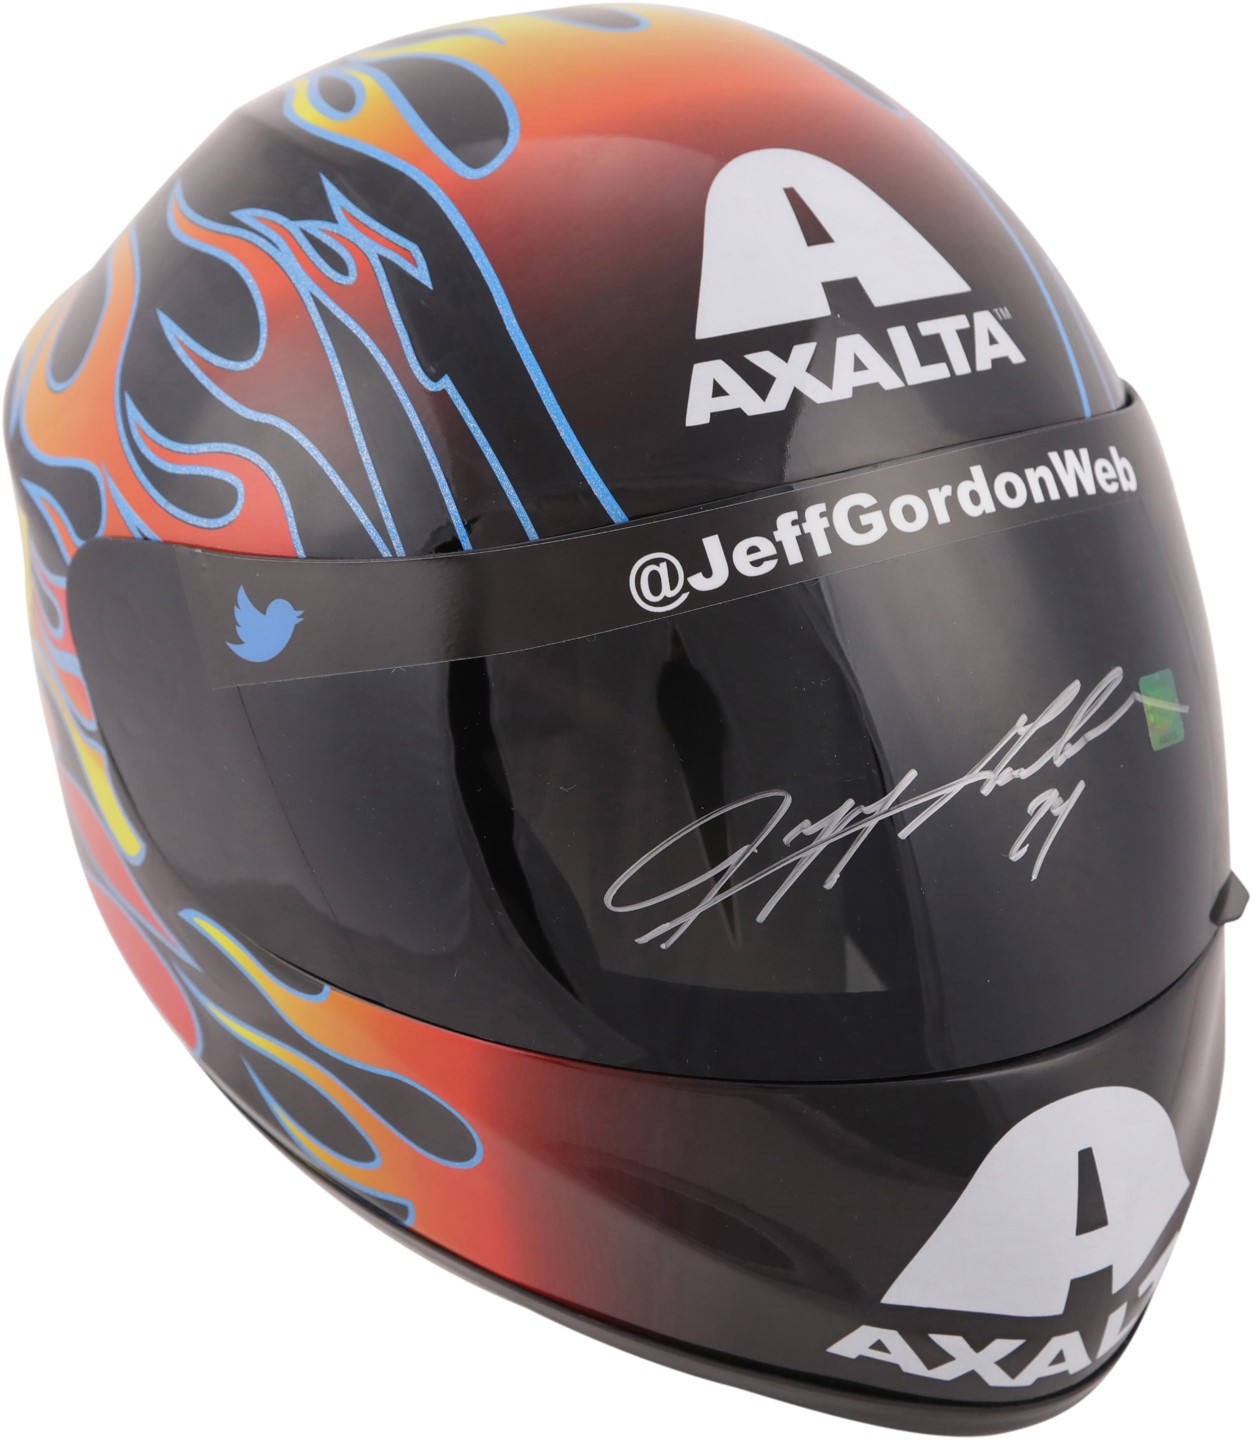 - Jeff Gordon Signed Helmet